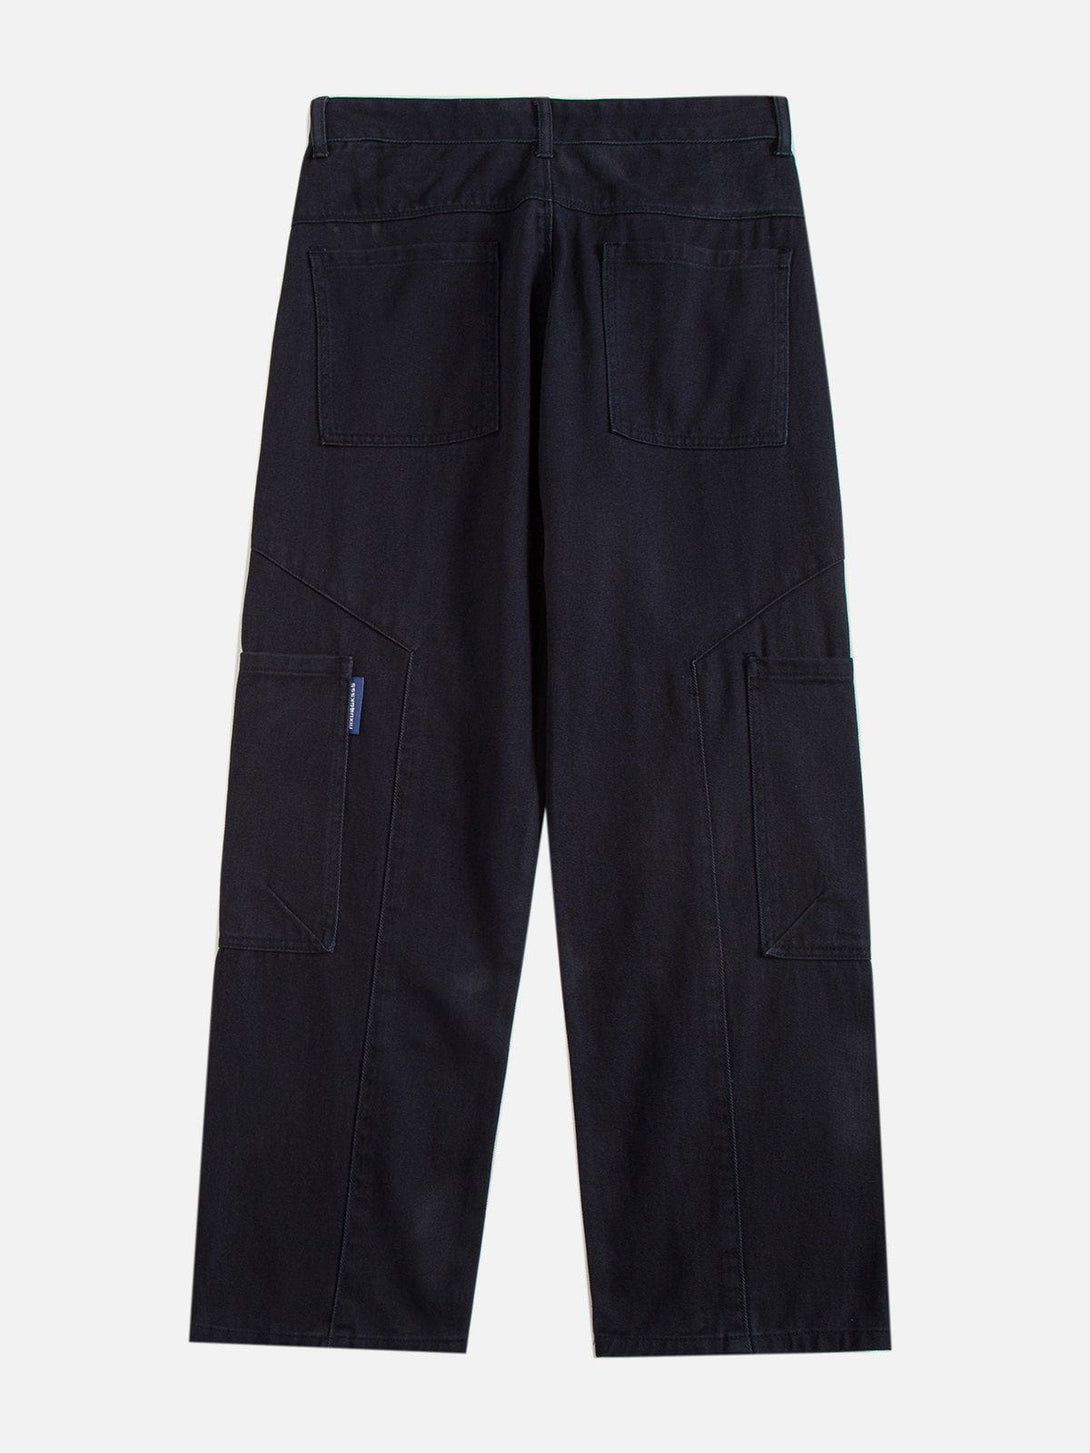 Majesda® - Vertical Pocket Cargo Pants outfit ideas streetwear fashion